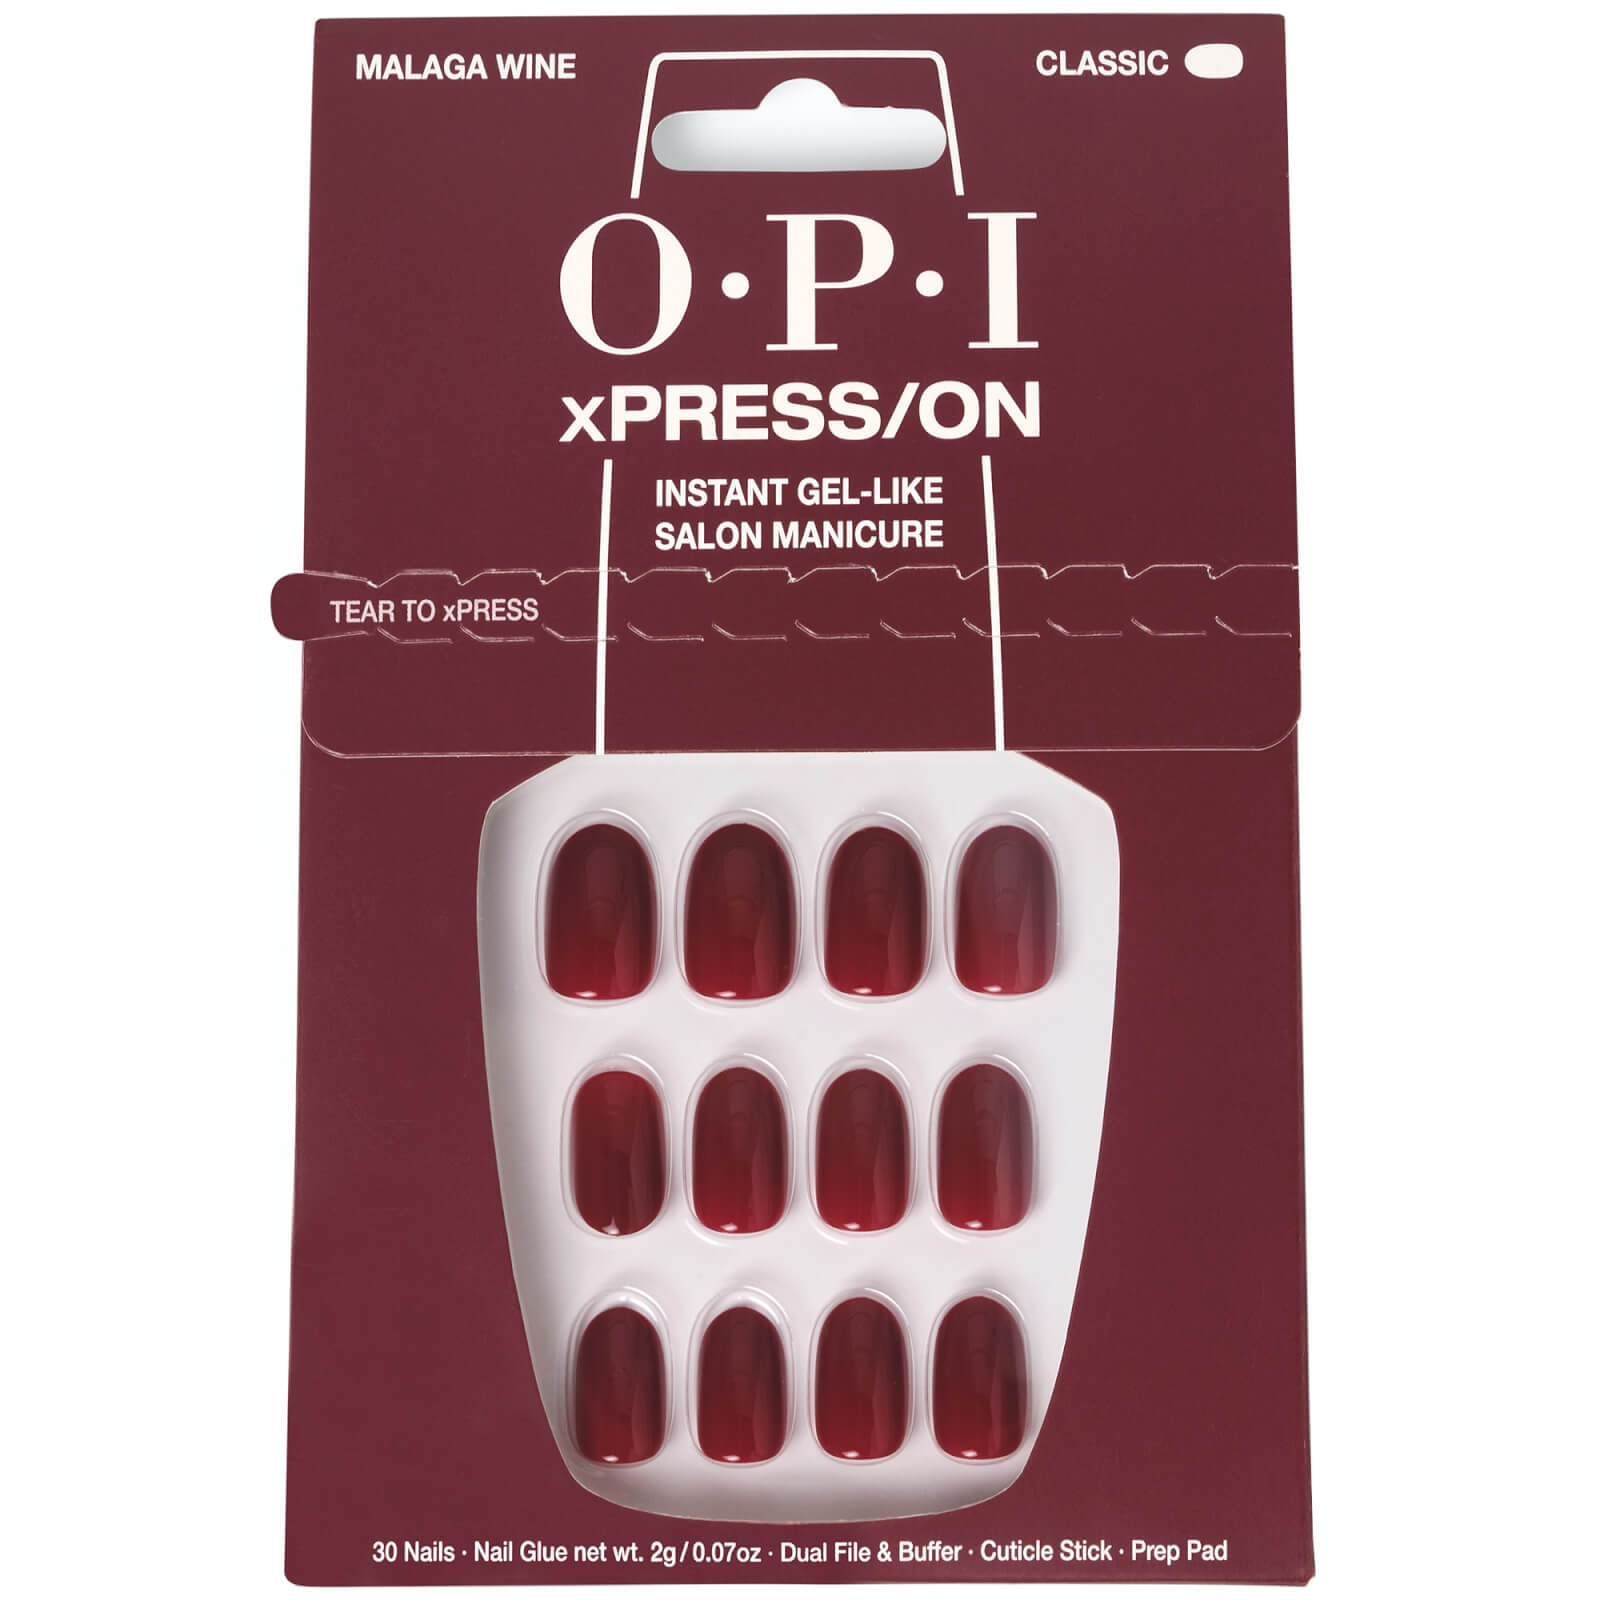 Opi Xpress/on - Malaga Wine Press On Nails Gel-like Salon Manicure In White